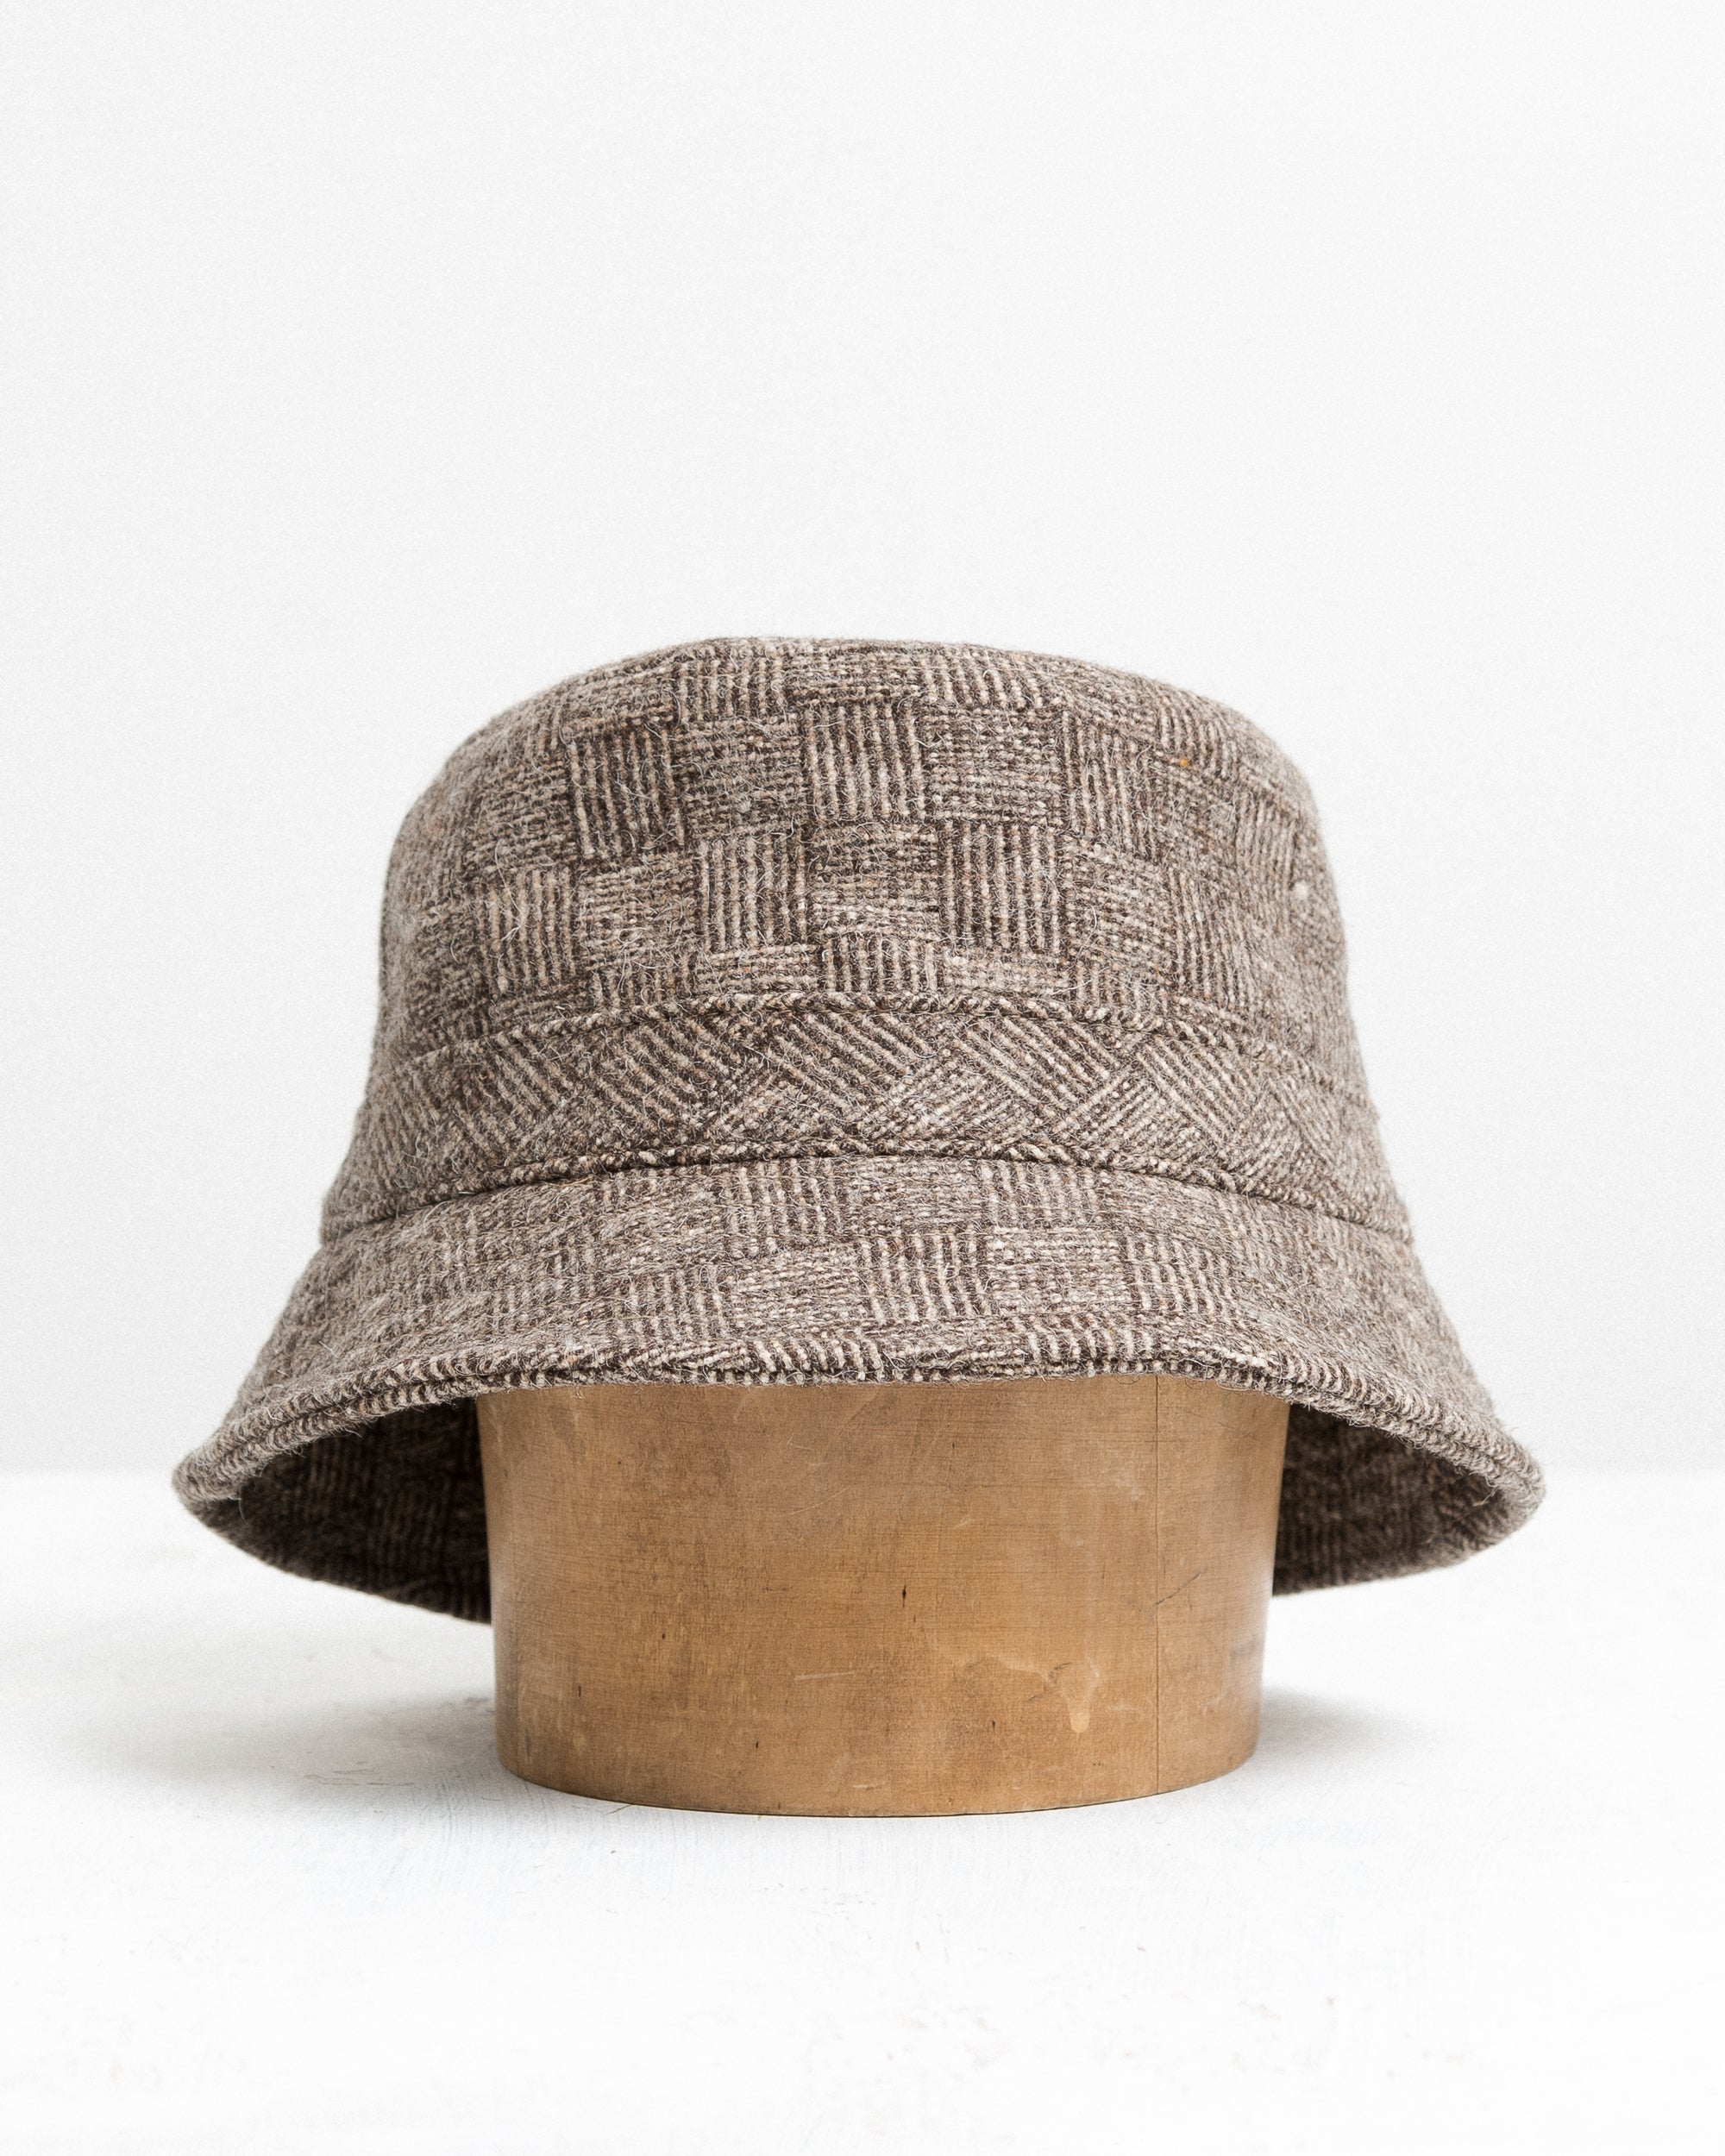 Bhanu Bucket Hat in Wheat Hatch